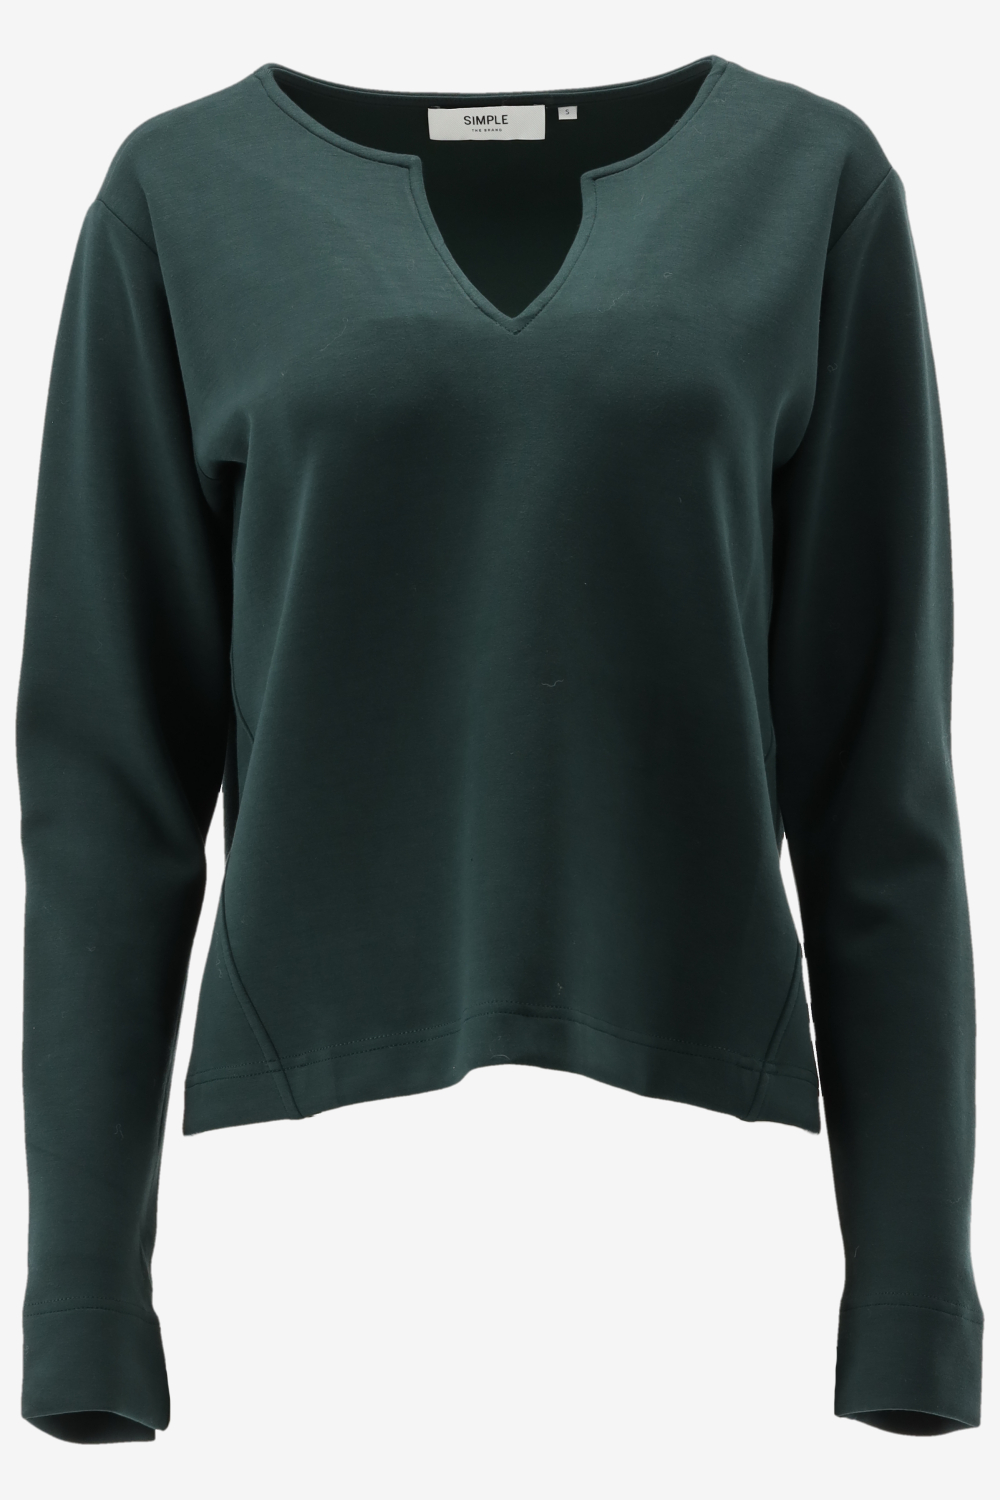 Simple Maddy Jer-modal-22-3 Tops & T-shirts Dames - Shirt - Groen - Maat L